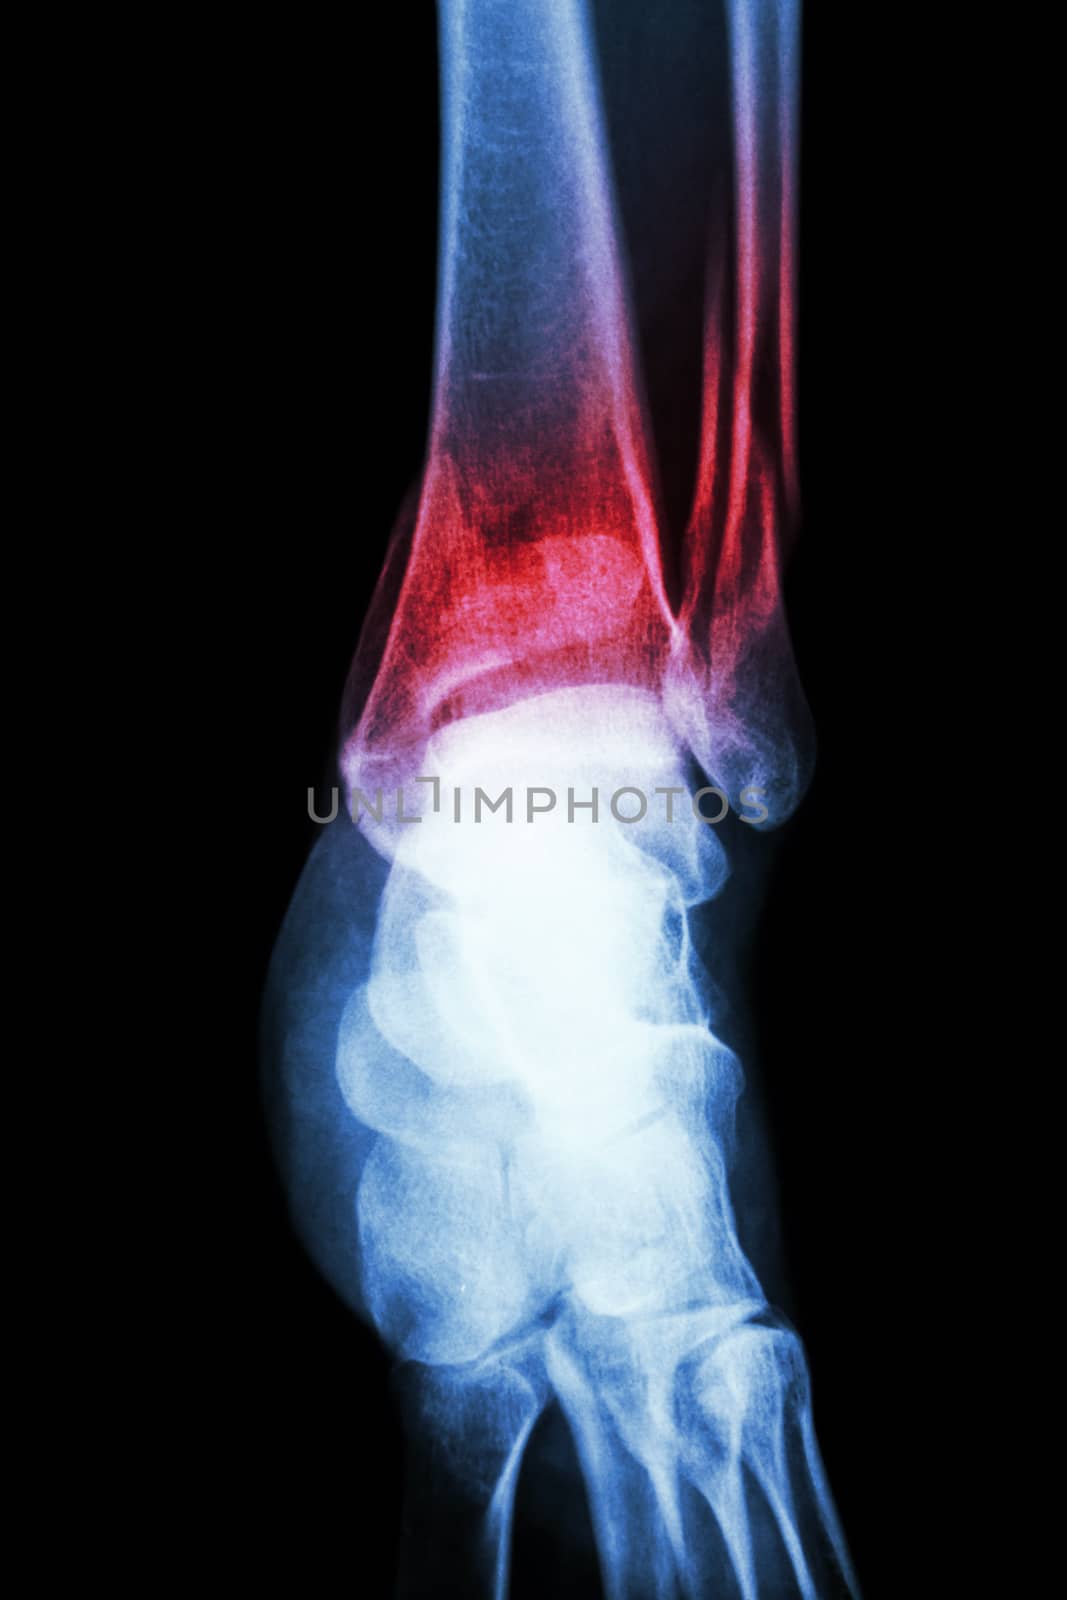 film x-ray ankle show fracture distal tibia and fibula (leg's bone)